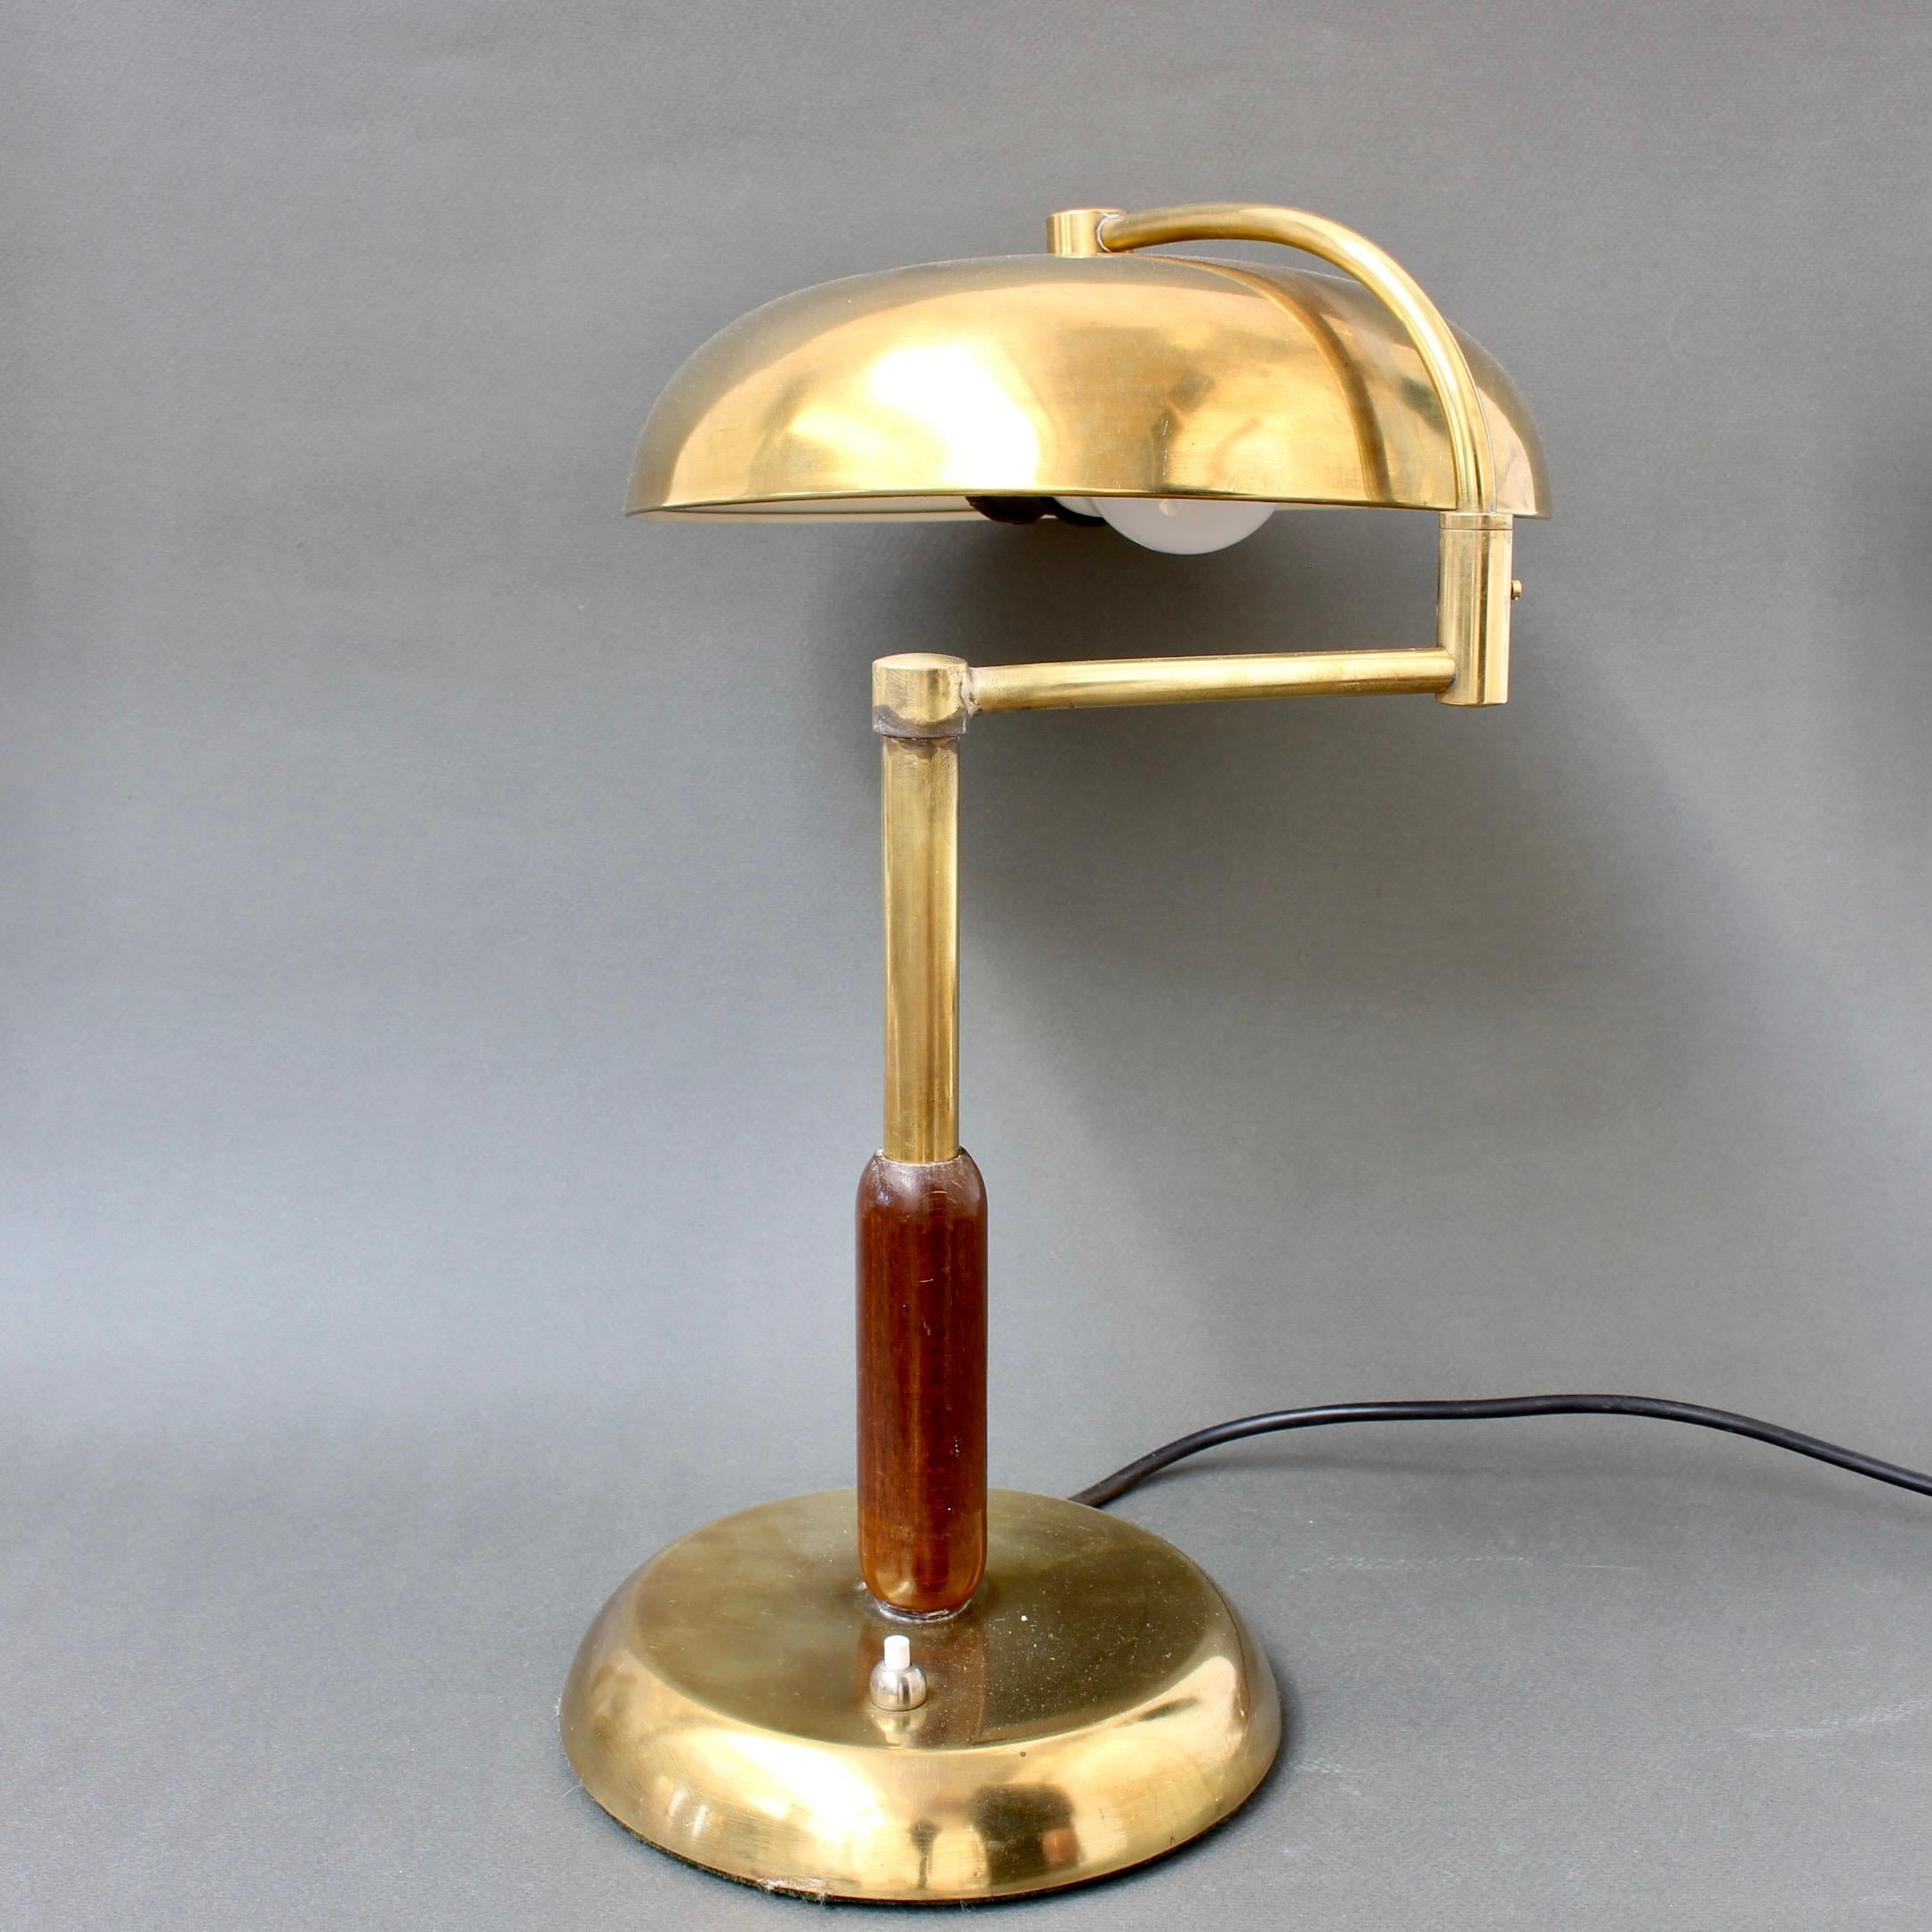 Mid-Century Modern Italian Mid-Century Brass Table Lamp with Swivel Arm, circa 1950s For Sale